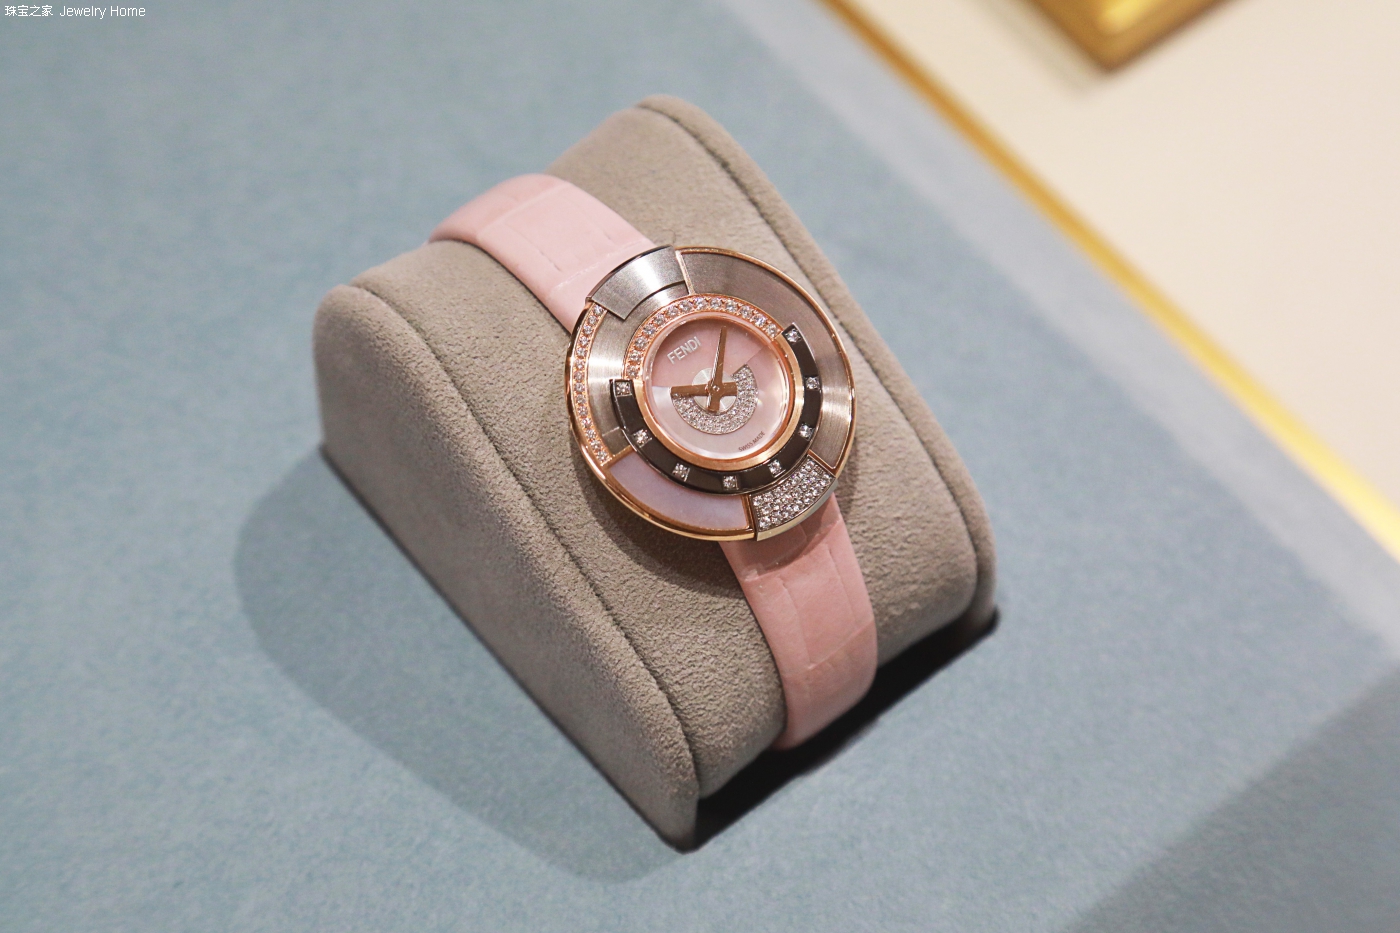 FENDI Timepieces推出全新Policromia系列高级珠宝腕表